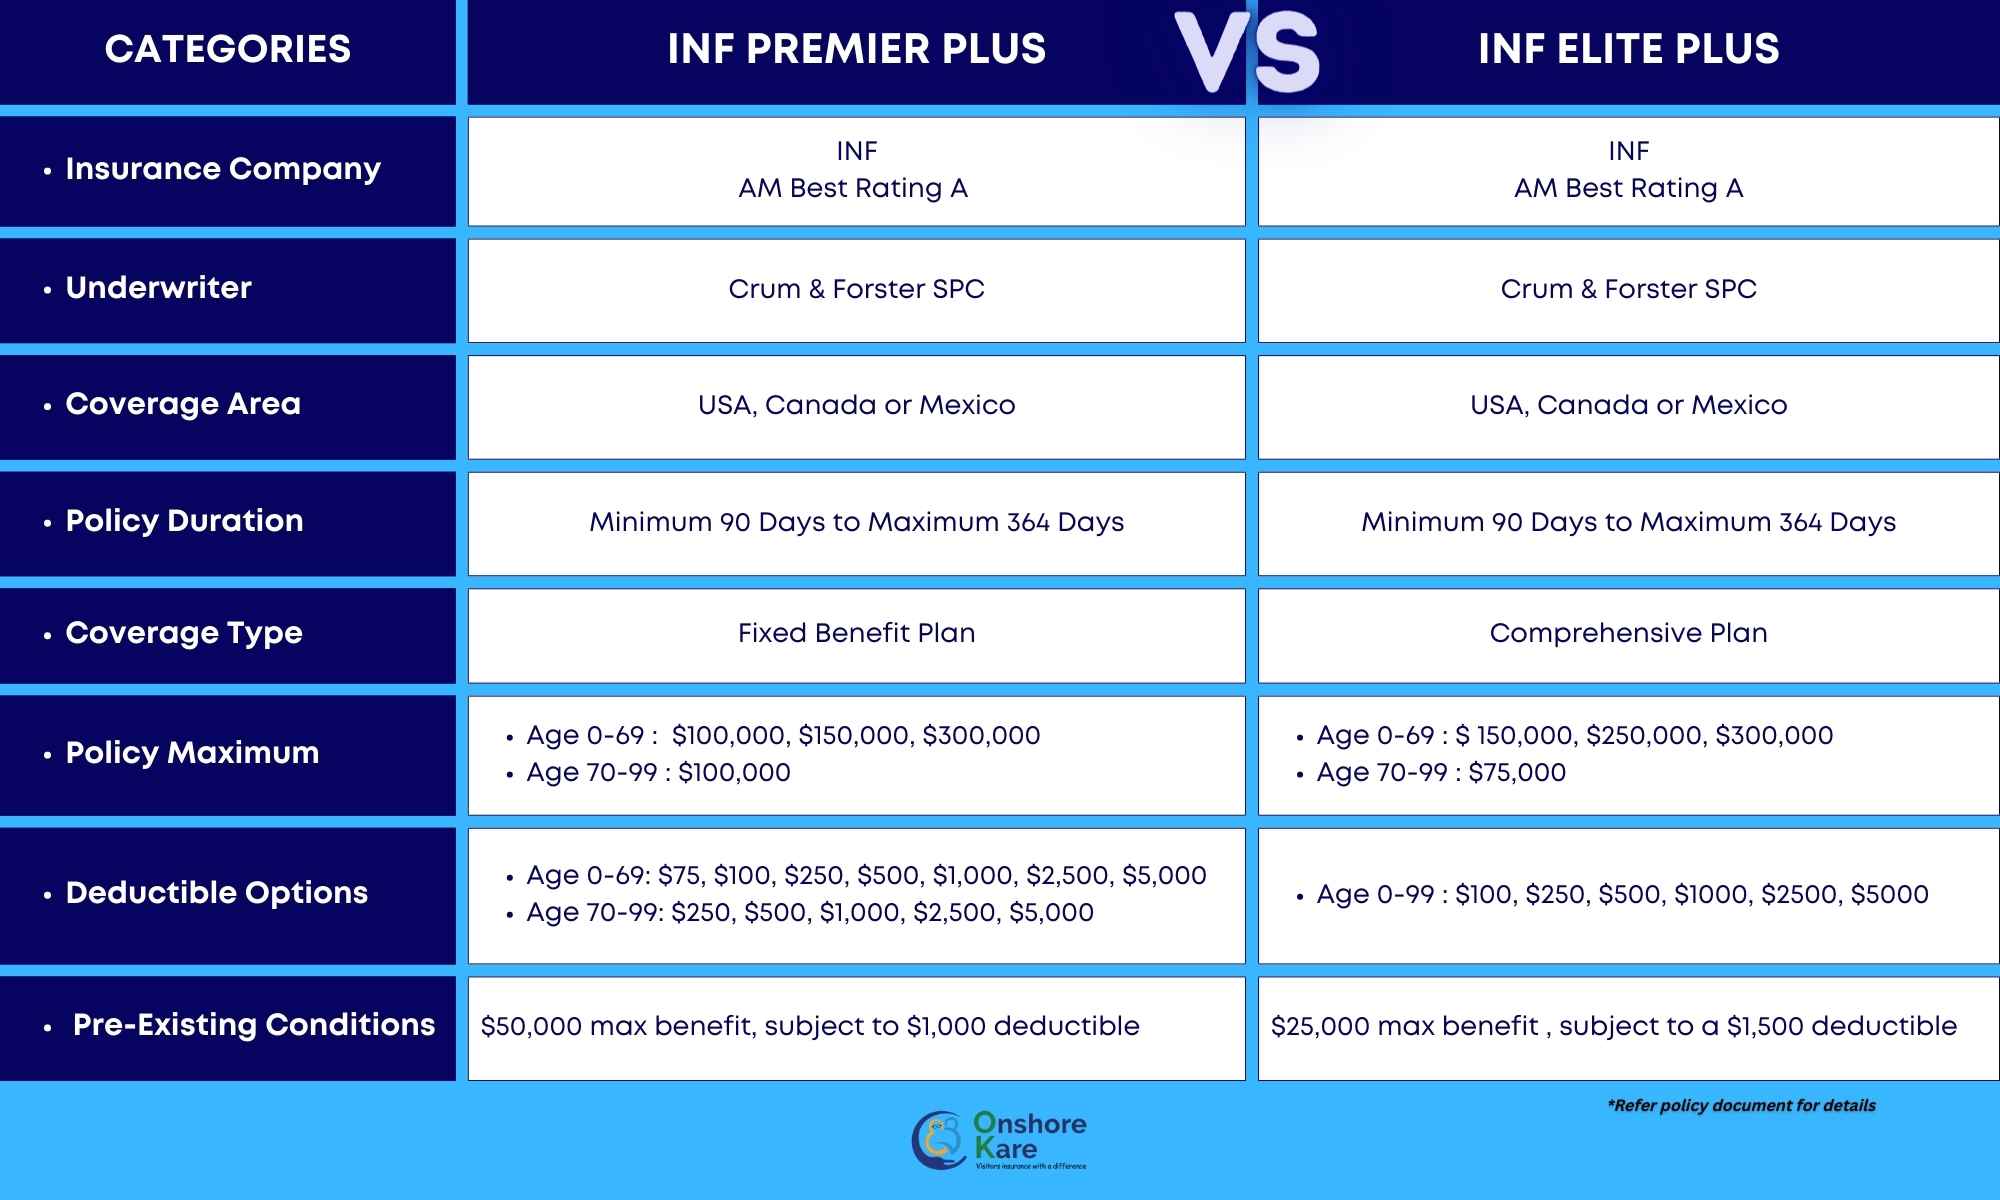 INF Premier Plus vs INF Elite Plus Plan Highlights